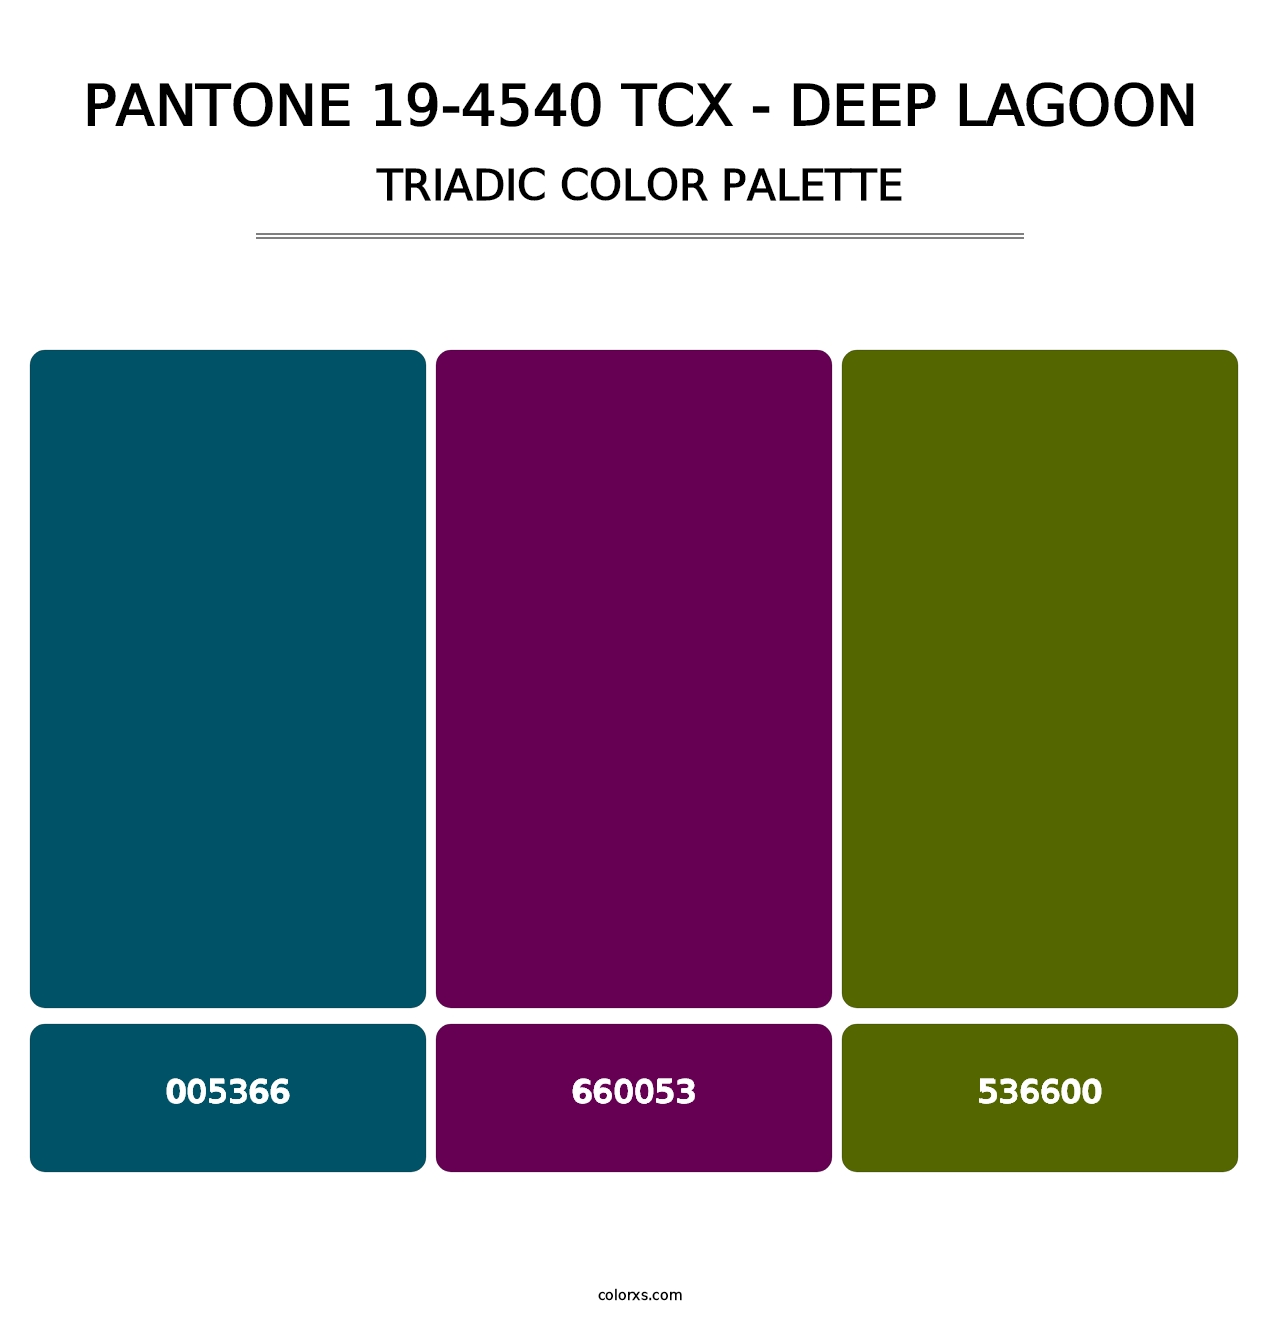 PANTONE 19-4540 TCX - Deep Lagoon - Triadic Color Palette